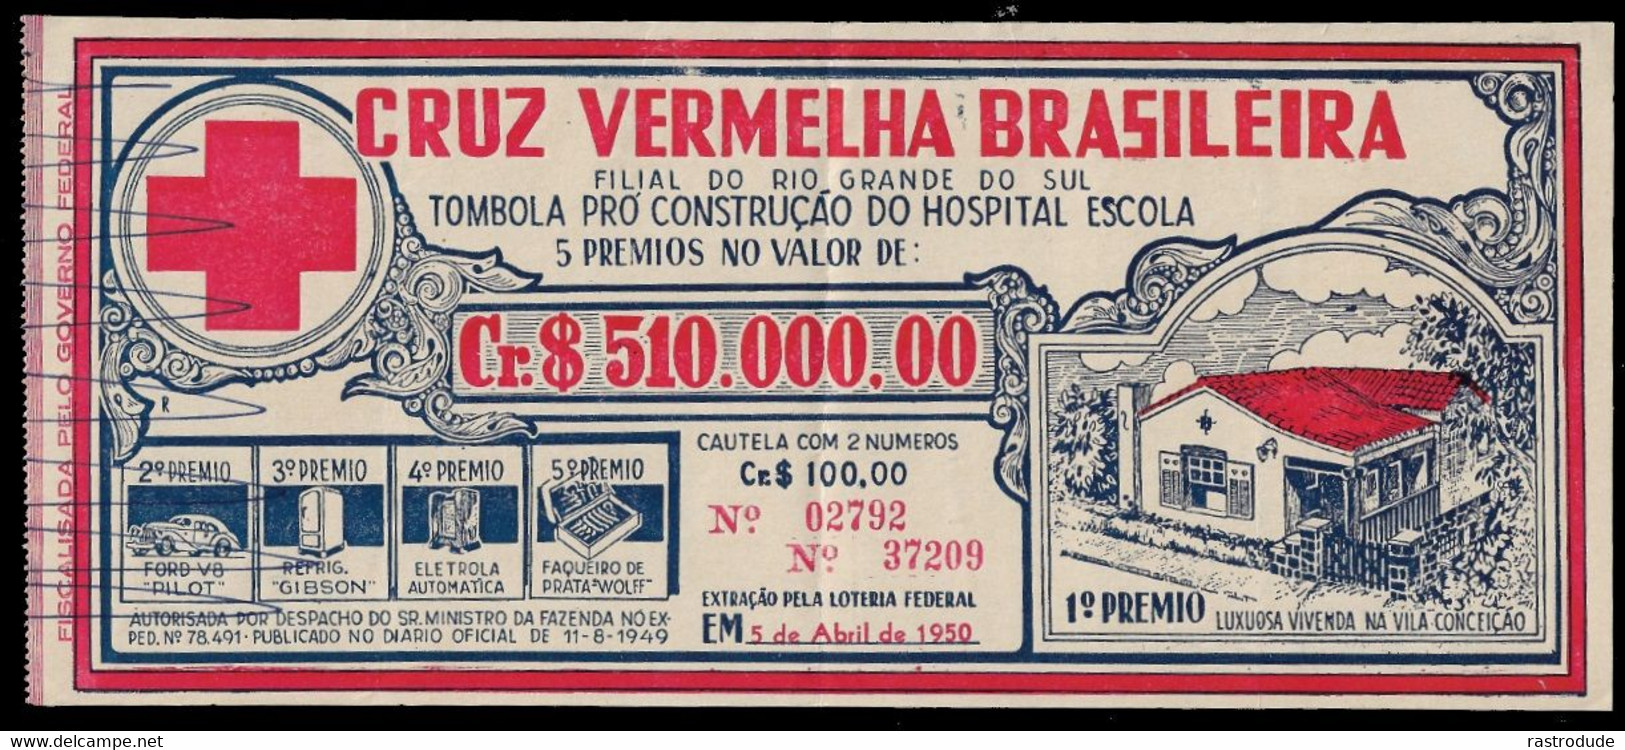 Lottery Tickets - 1950 BRASIL - LOTTERY TICKET LOTERIA CRUZ VERMELHA - RED  CROSS - ROTES KREUZ